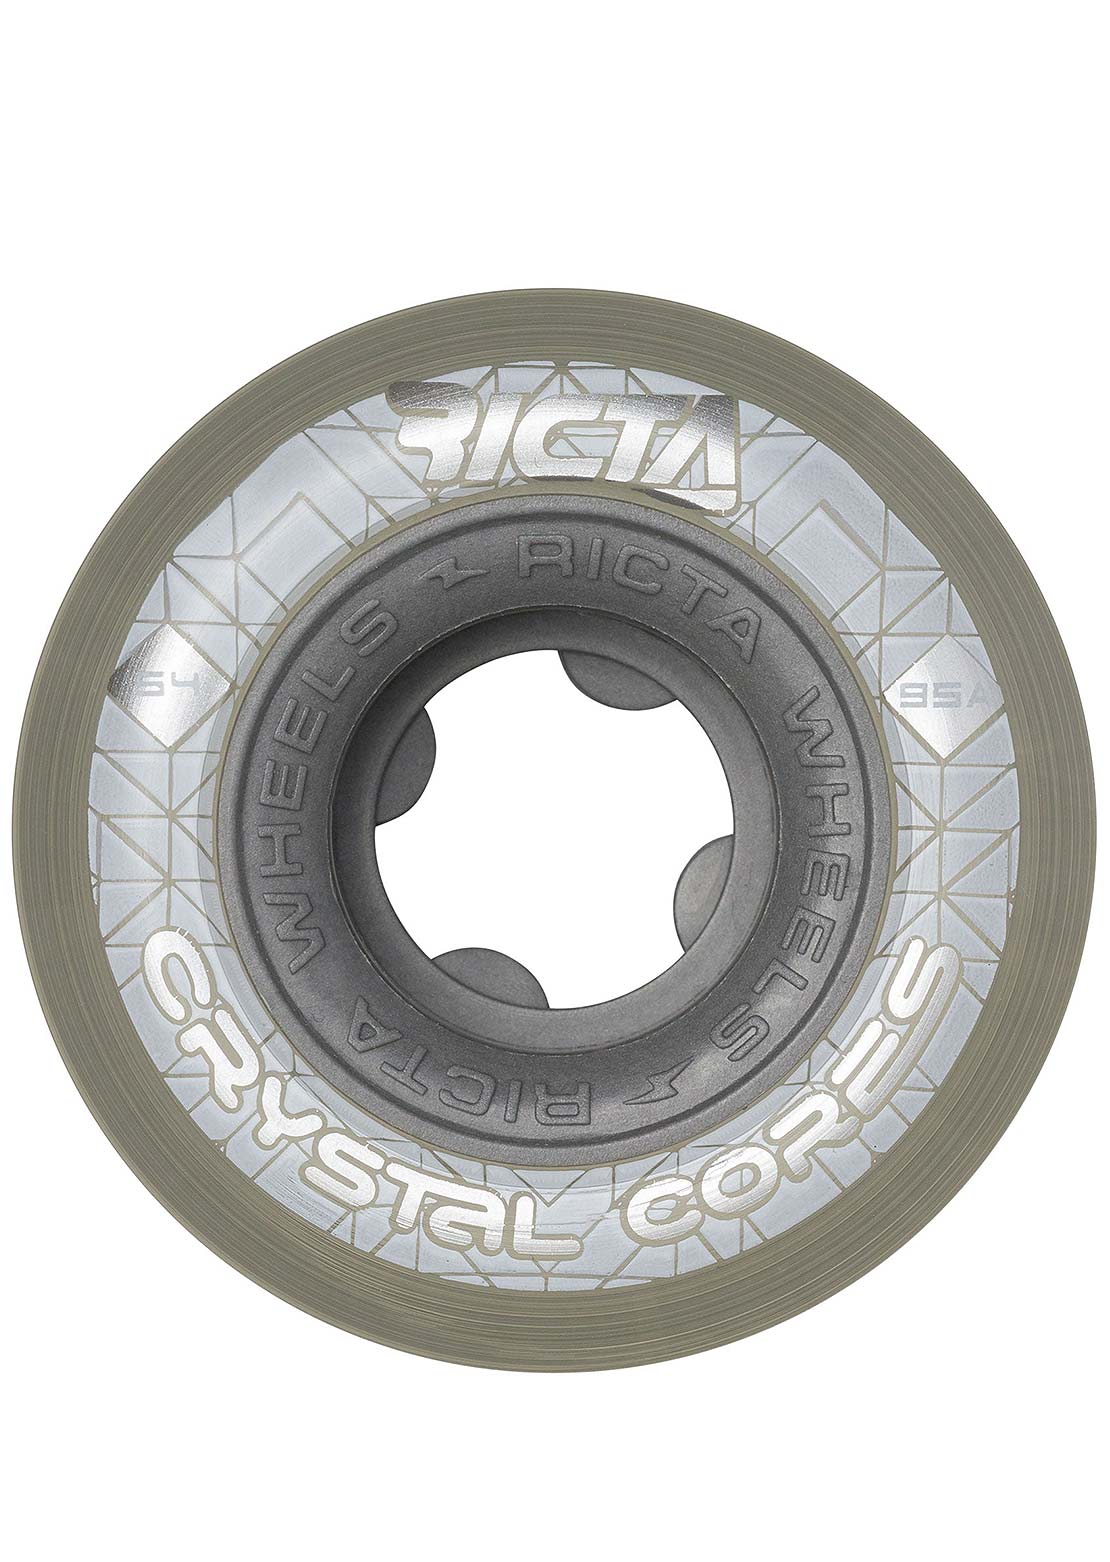 Ricta Crystal Cores 95A Skateboard Wheels 54 mm